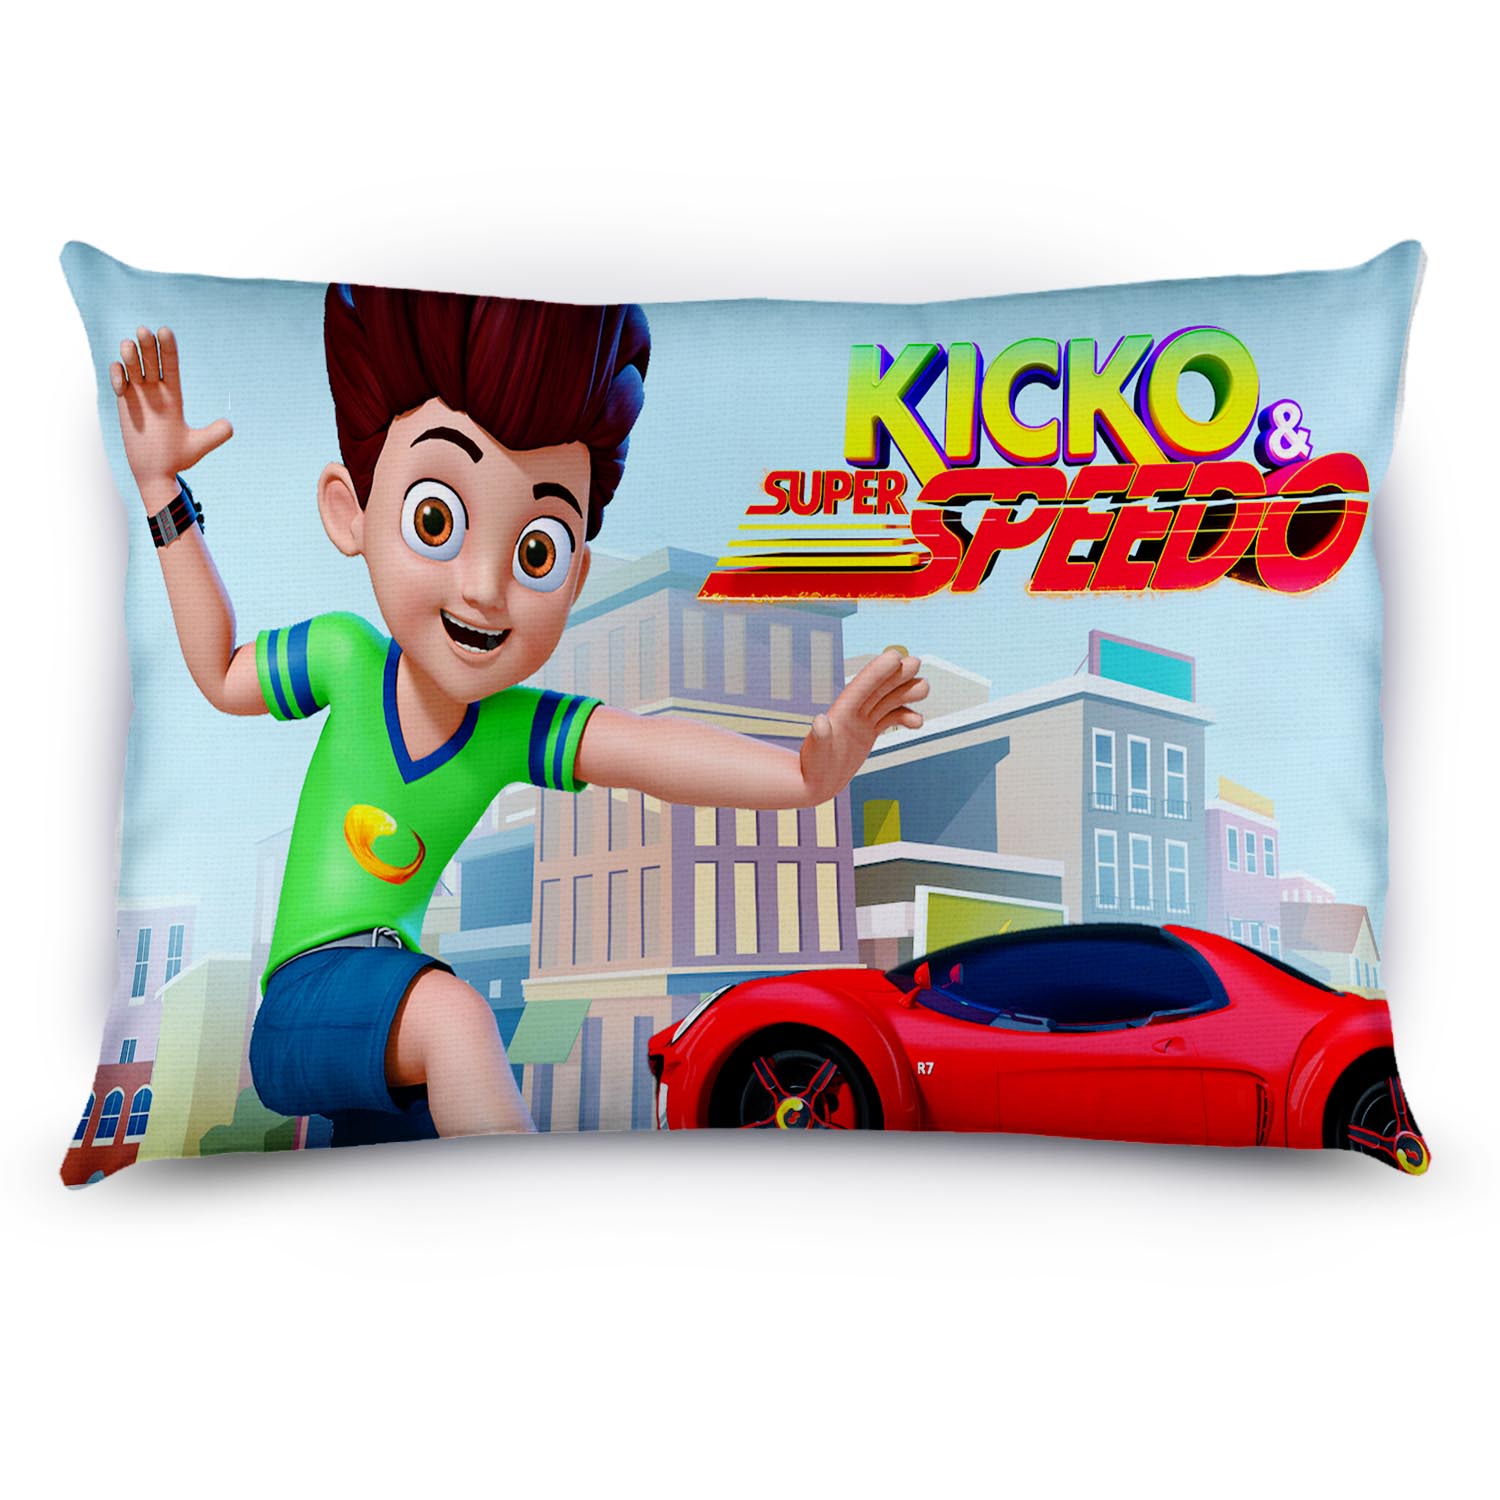 KICKO & SUPER SPEEDO Cartoon Pillow 13